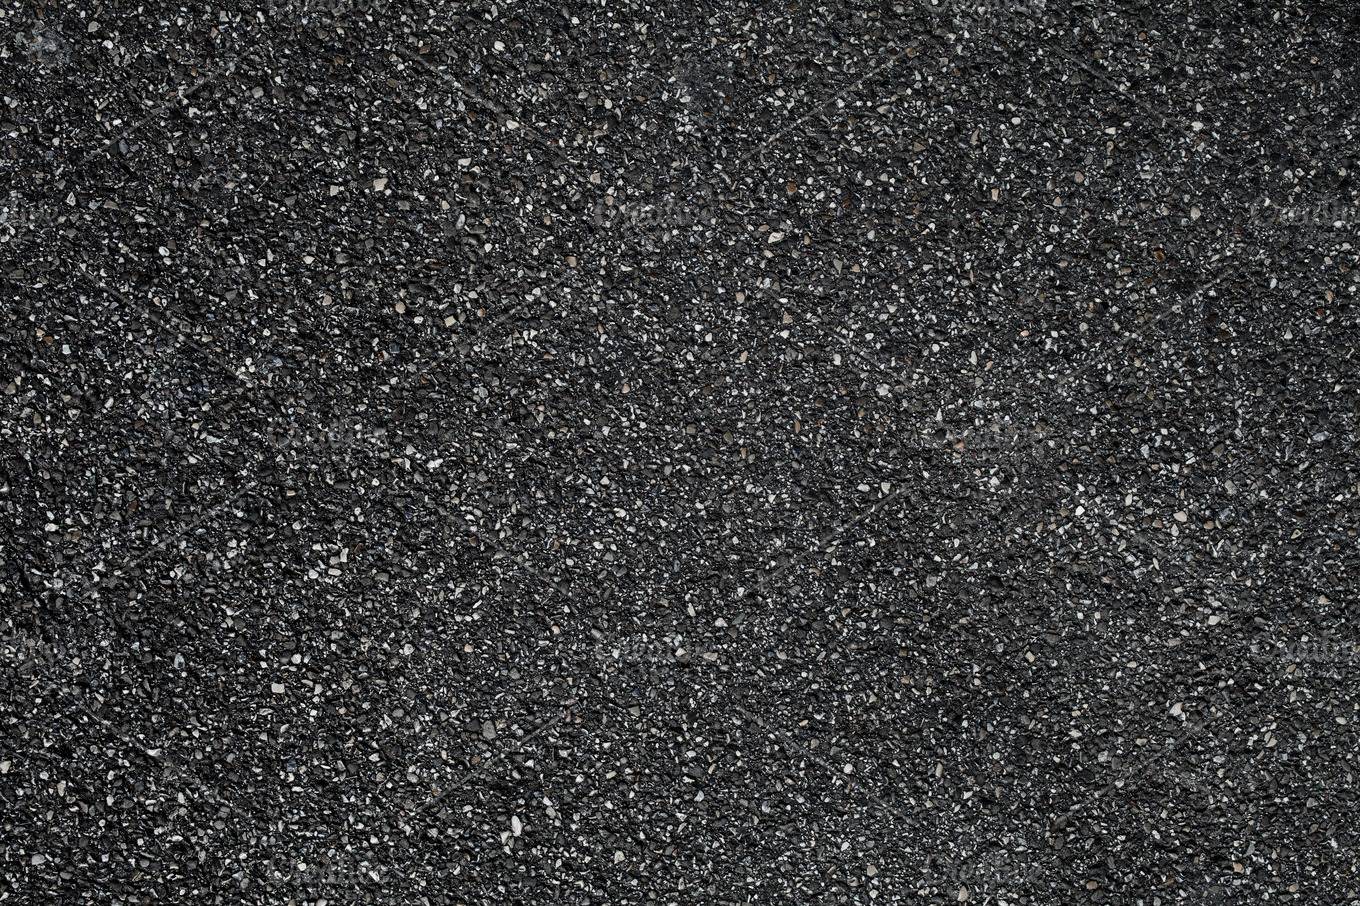 Rough asphalt texture | High-Quality Abstract Stock Photos ~ Creative Market